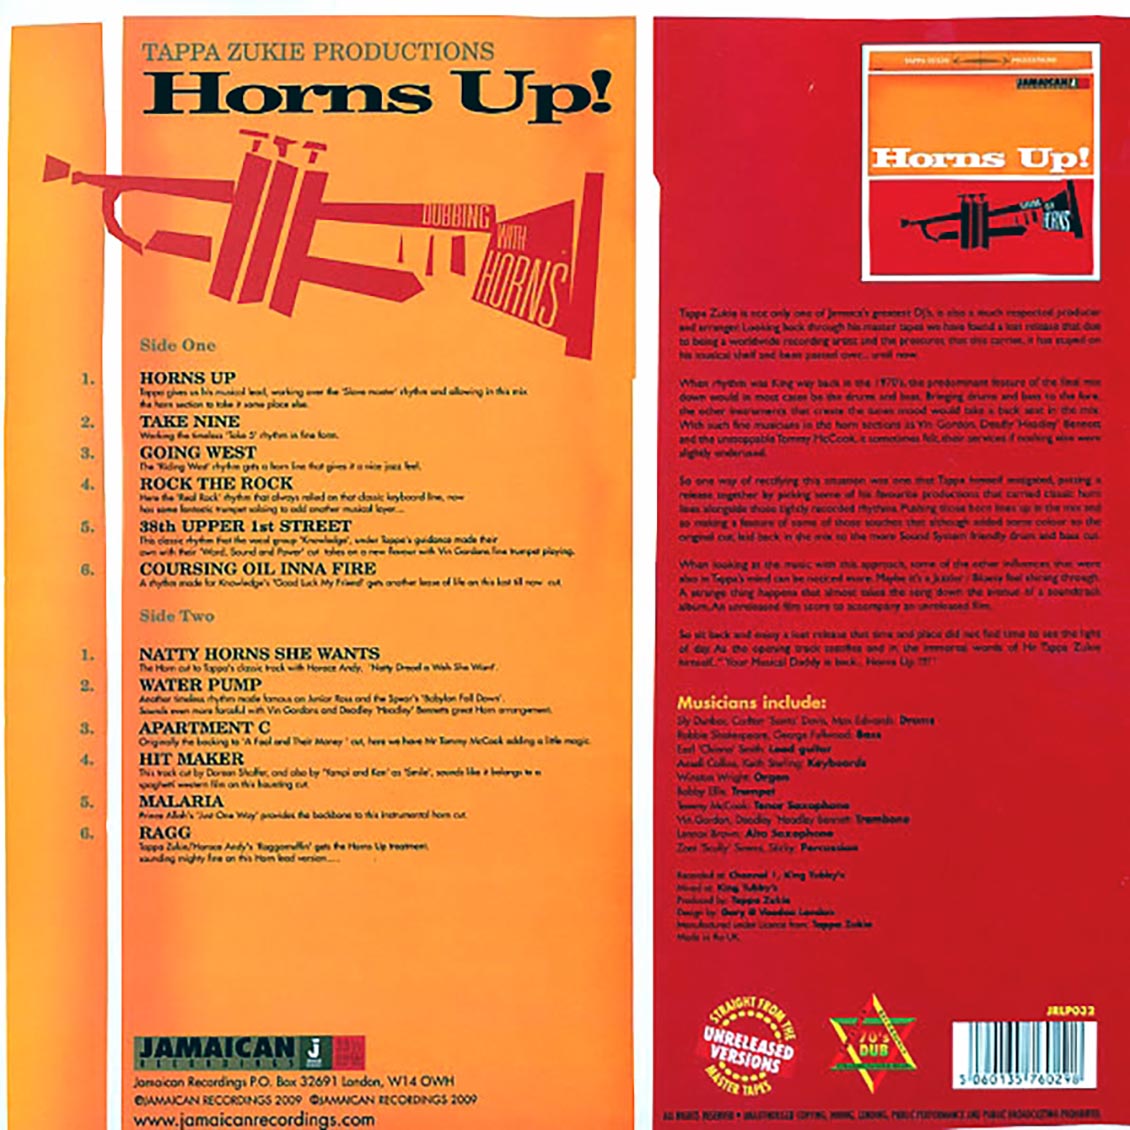 Tappa Zukie - Horns Up: Dubbing With Horns